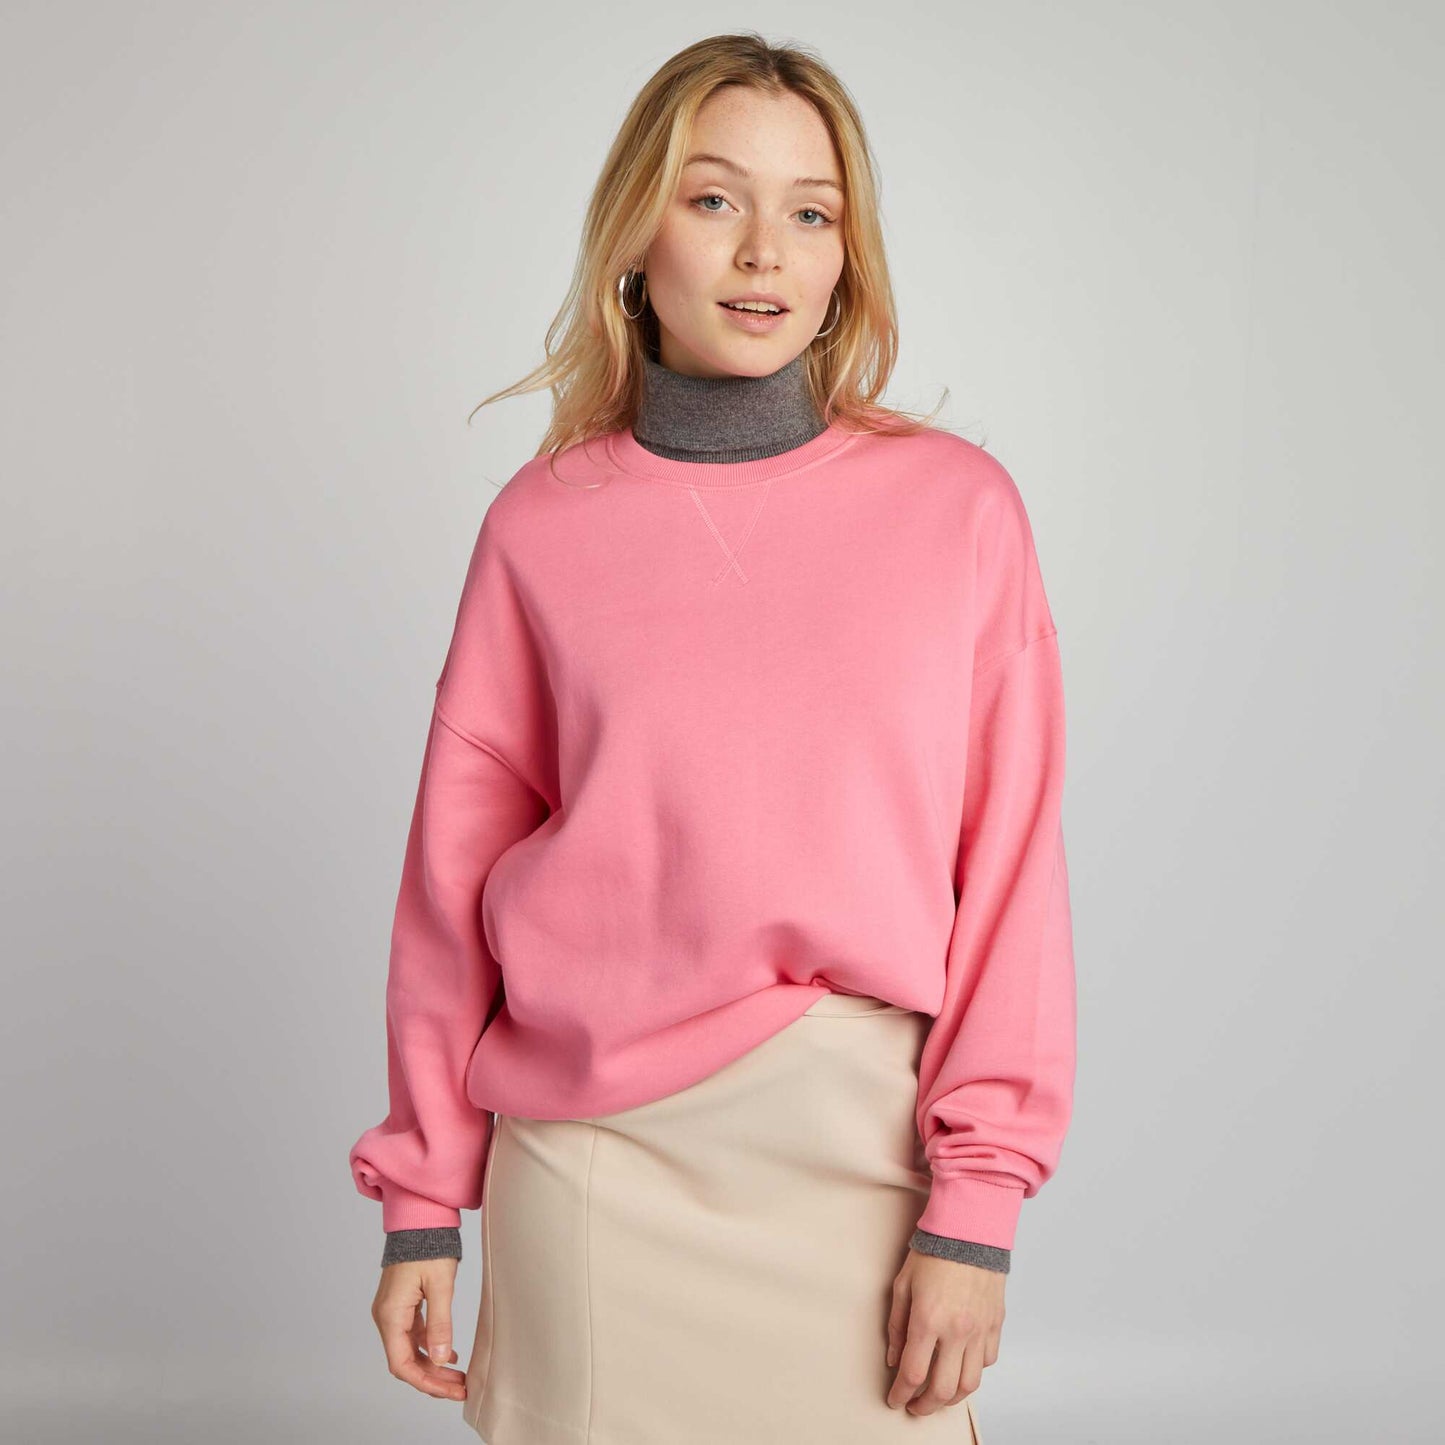 Plain sweatshirt fabric sweater pink